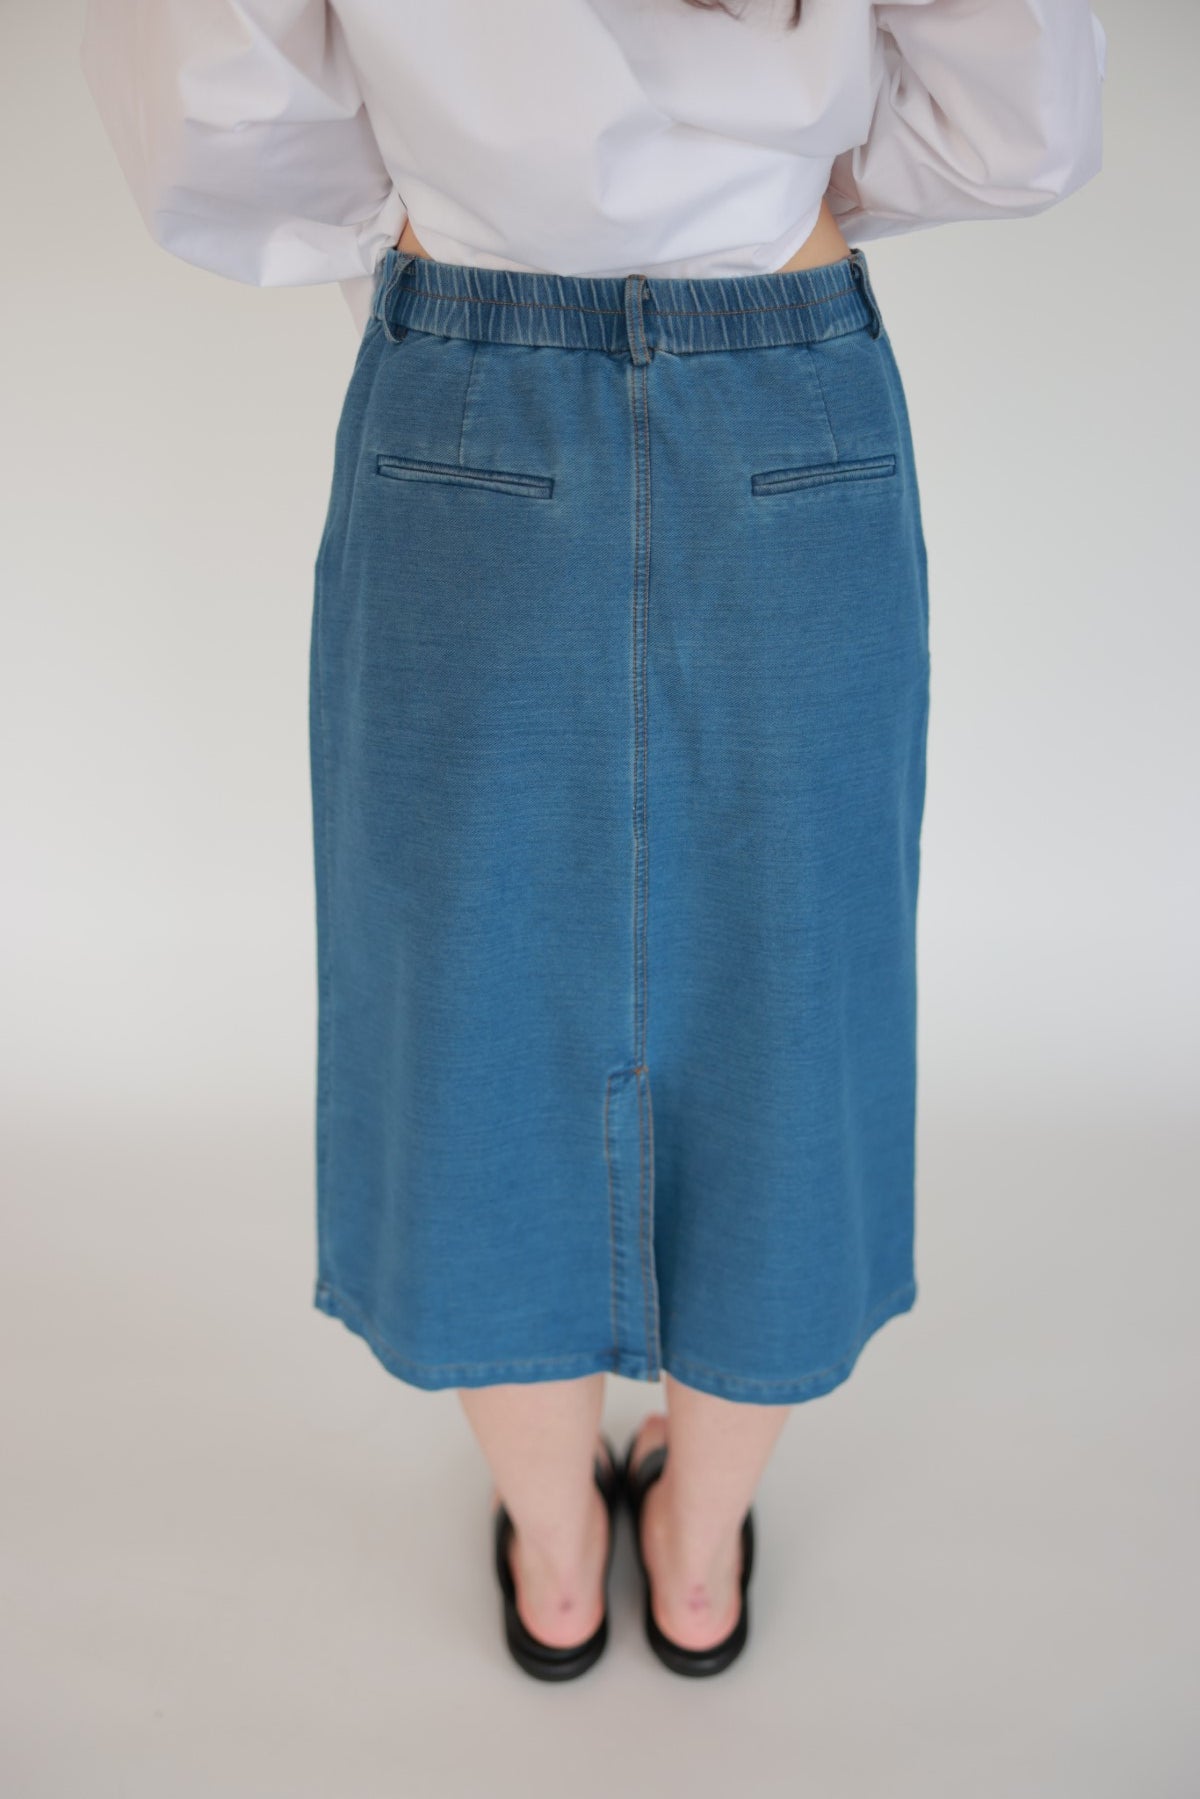 Jeans maxi skirt